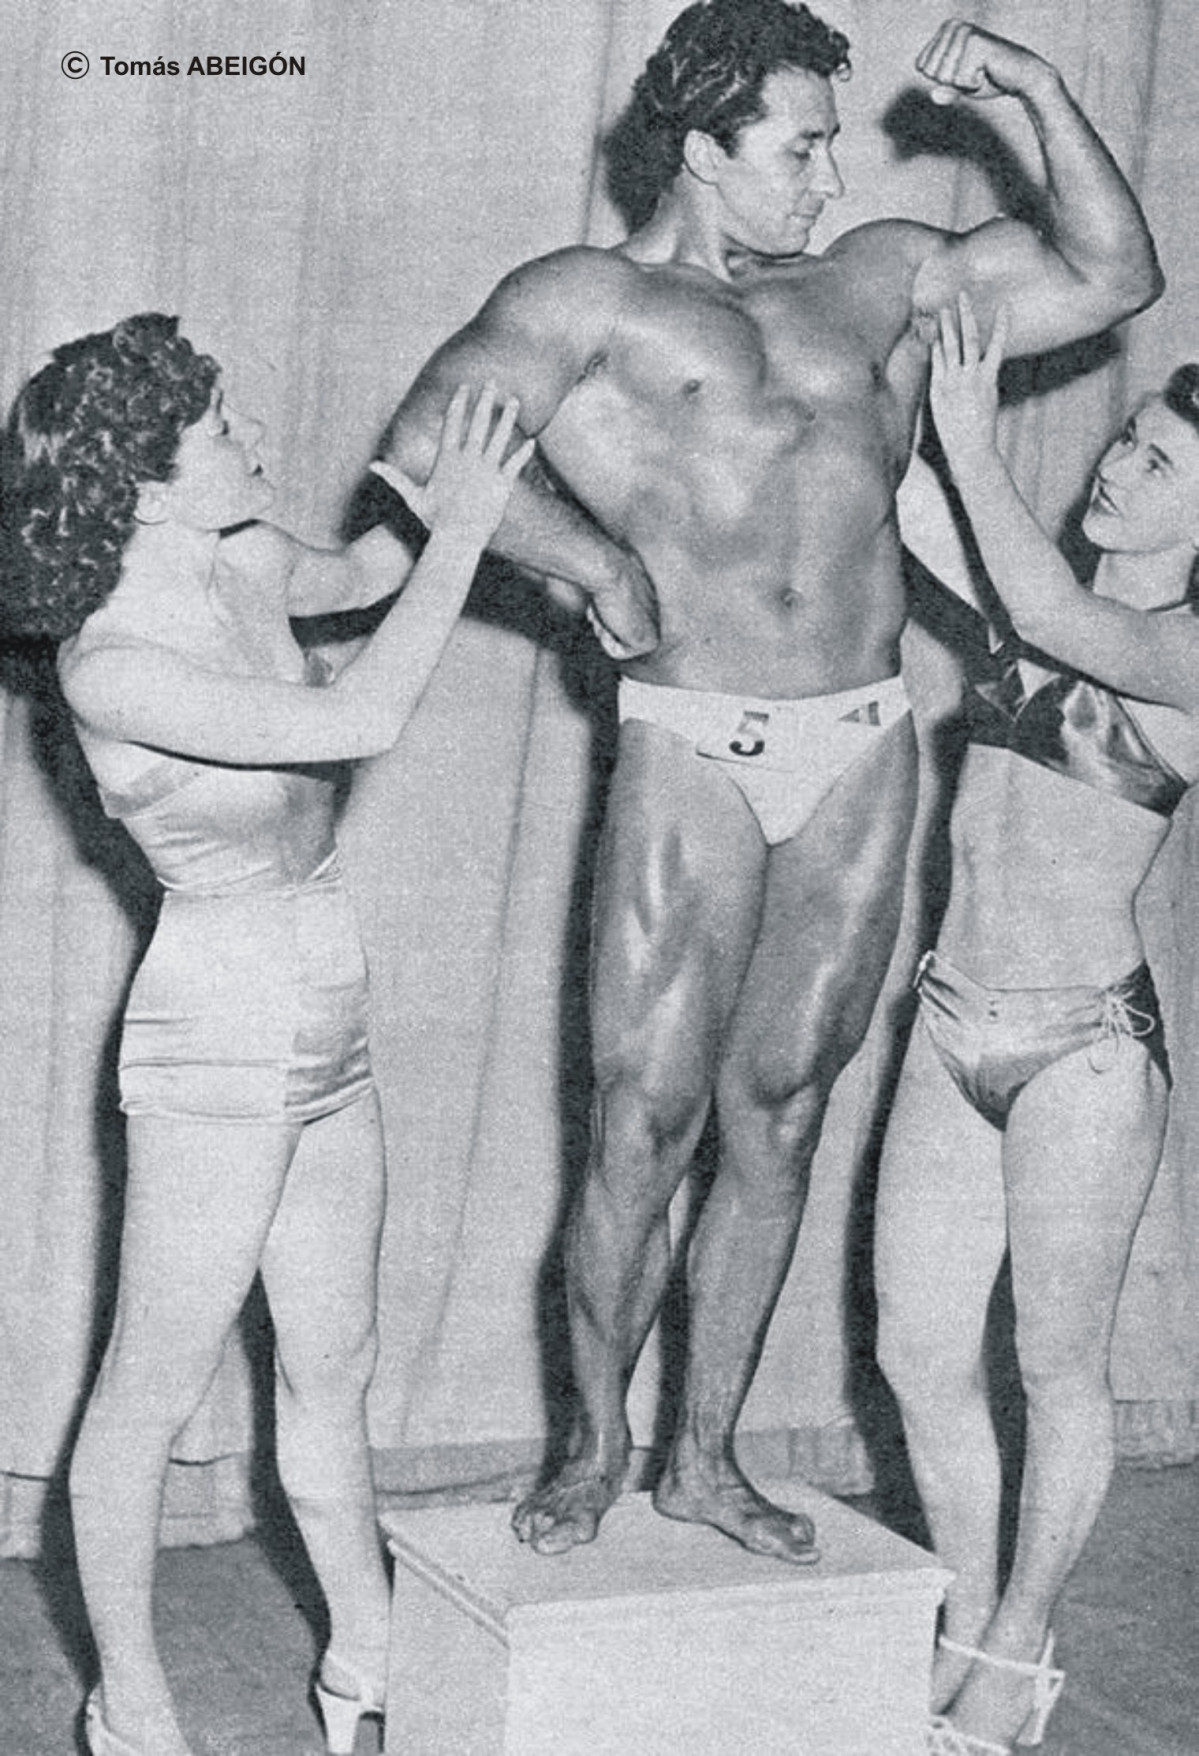 Juan FERRERO que despertu00f3 la admiraciu00f3n de estas dos bellas seu00f1oritas tras haberse proclamado vencedor del certamen de Mr. Universo Profesional NABBA en 1952